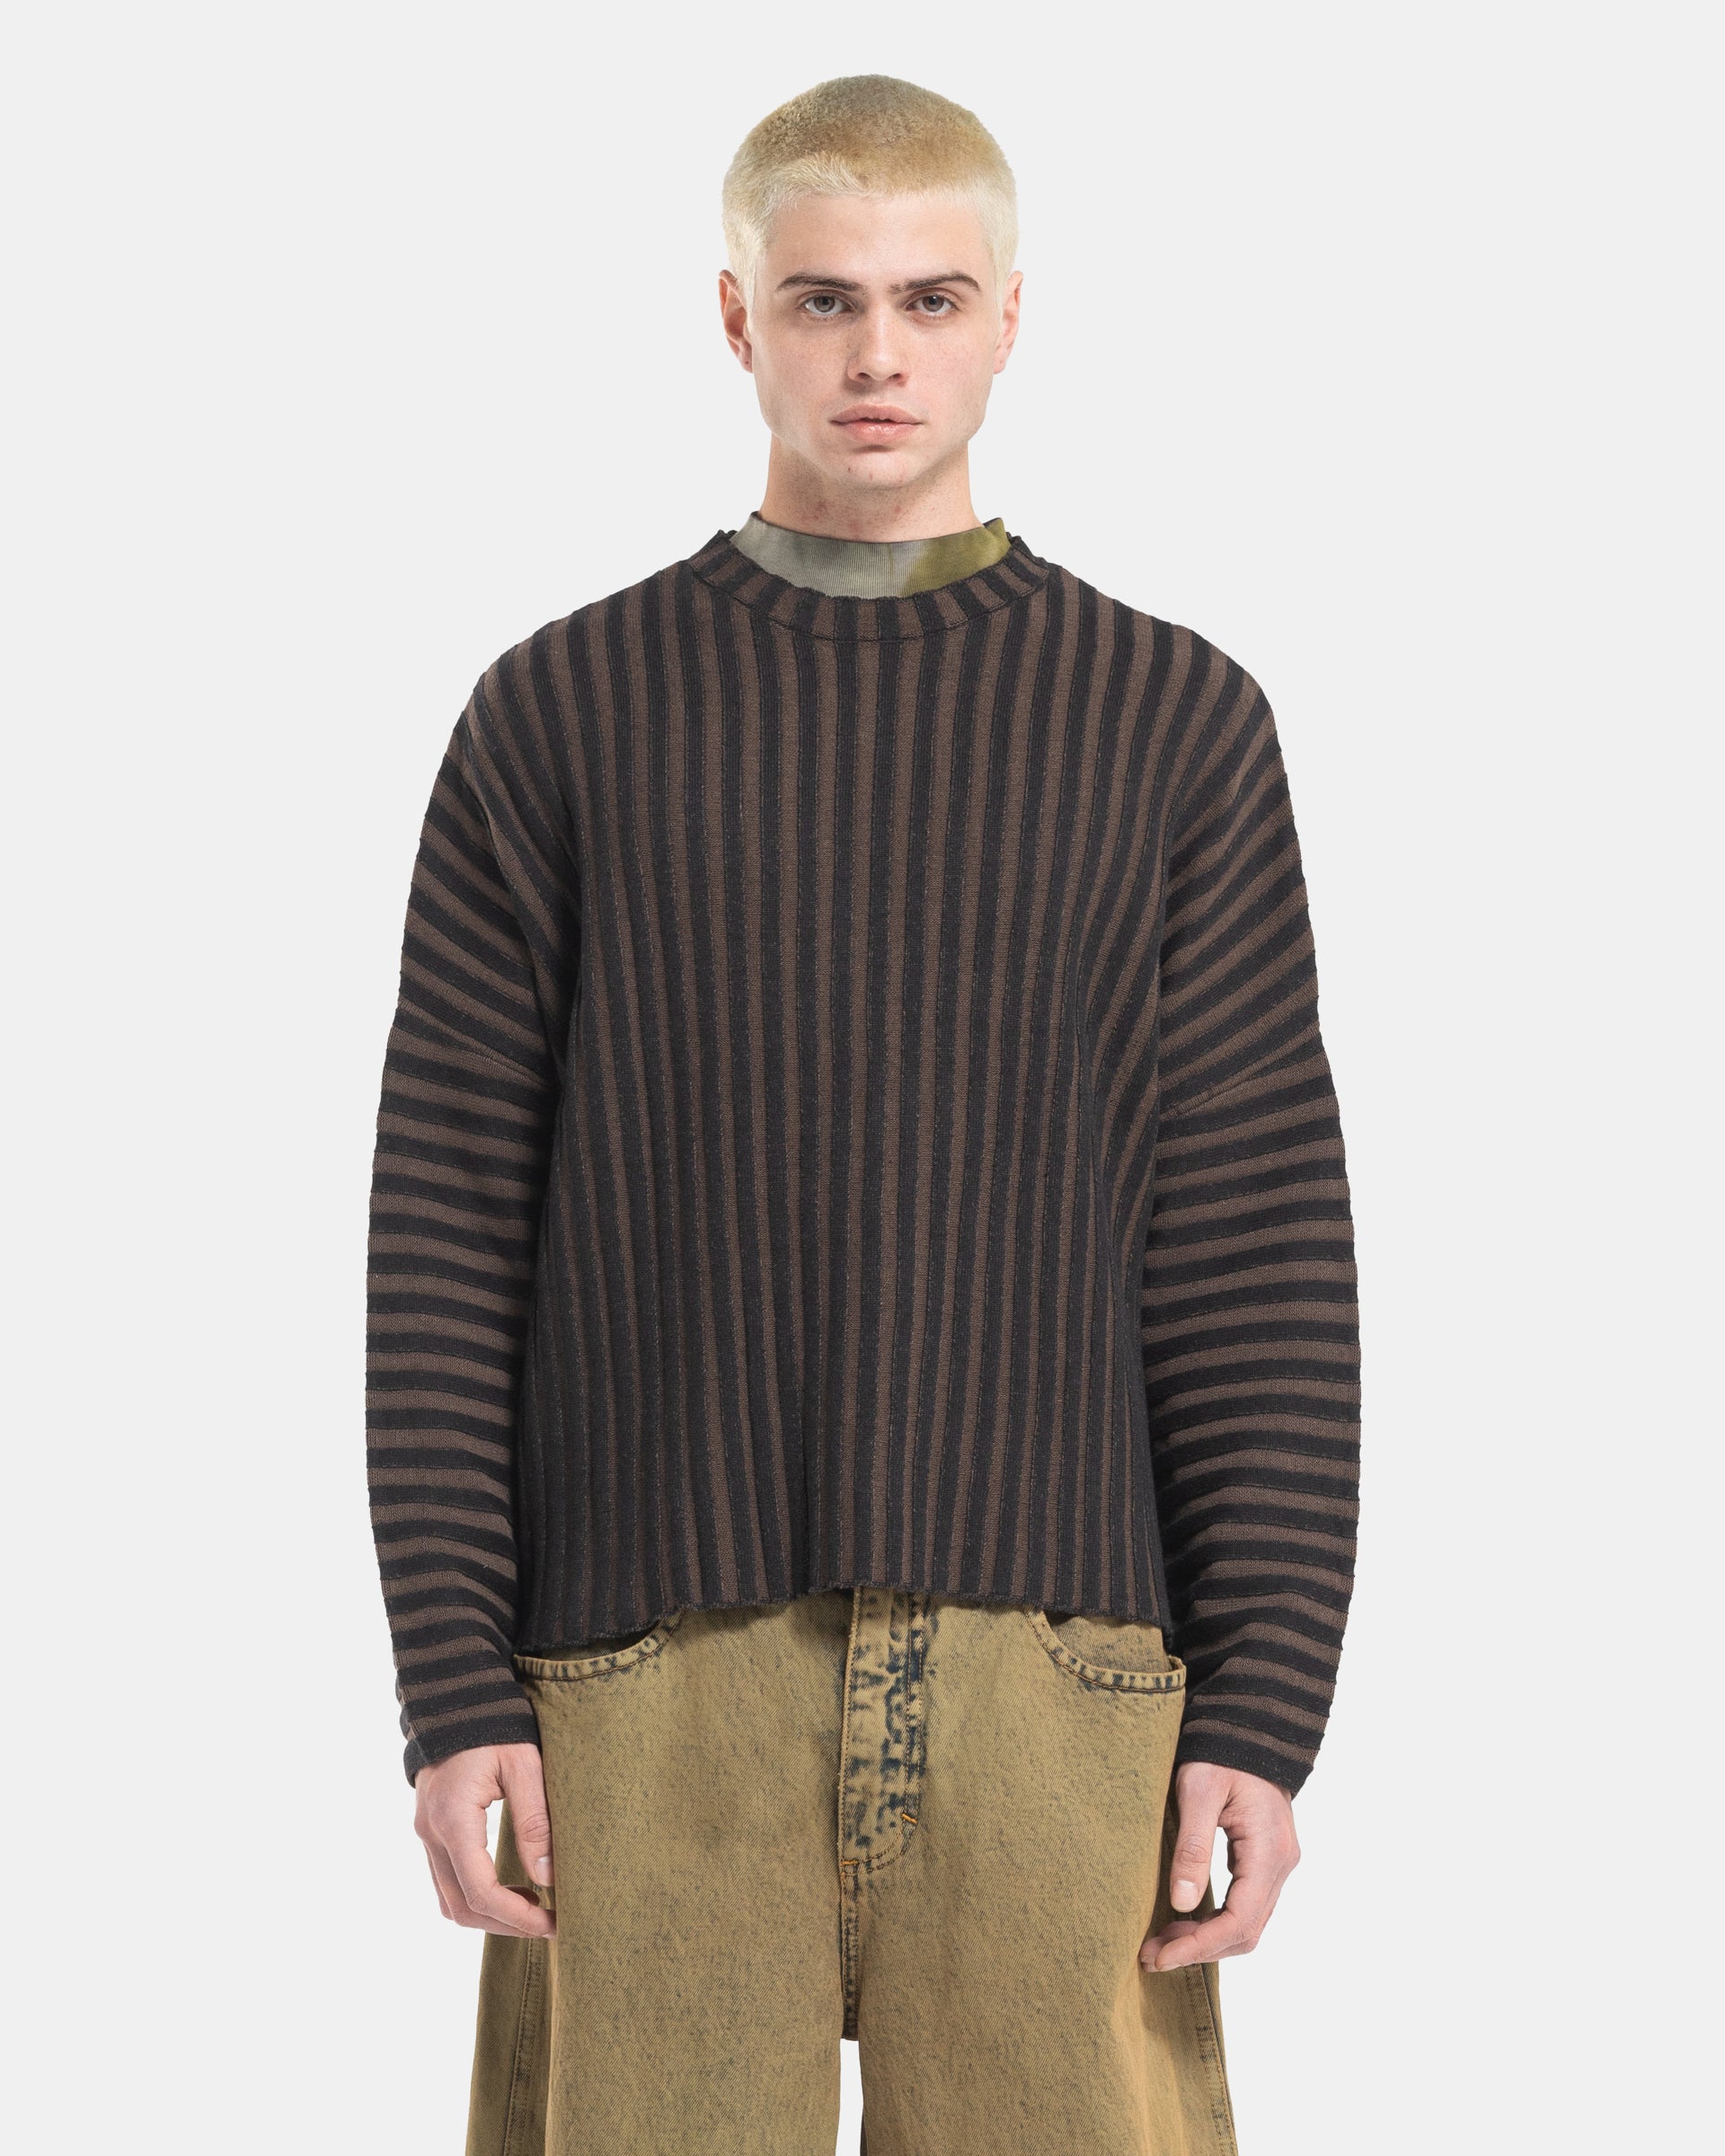 Male model wearing Eckhaus Latta Designer Wool Brown Sweater with knit stripes